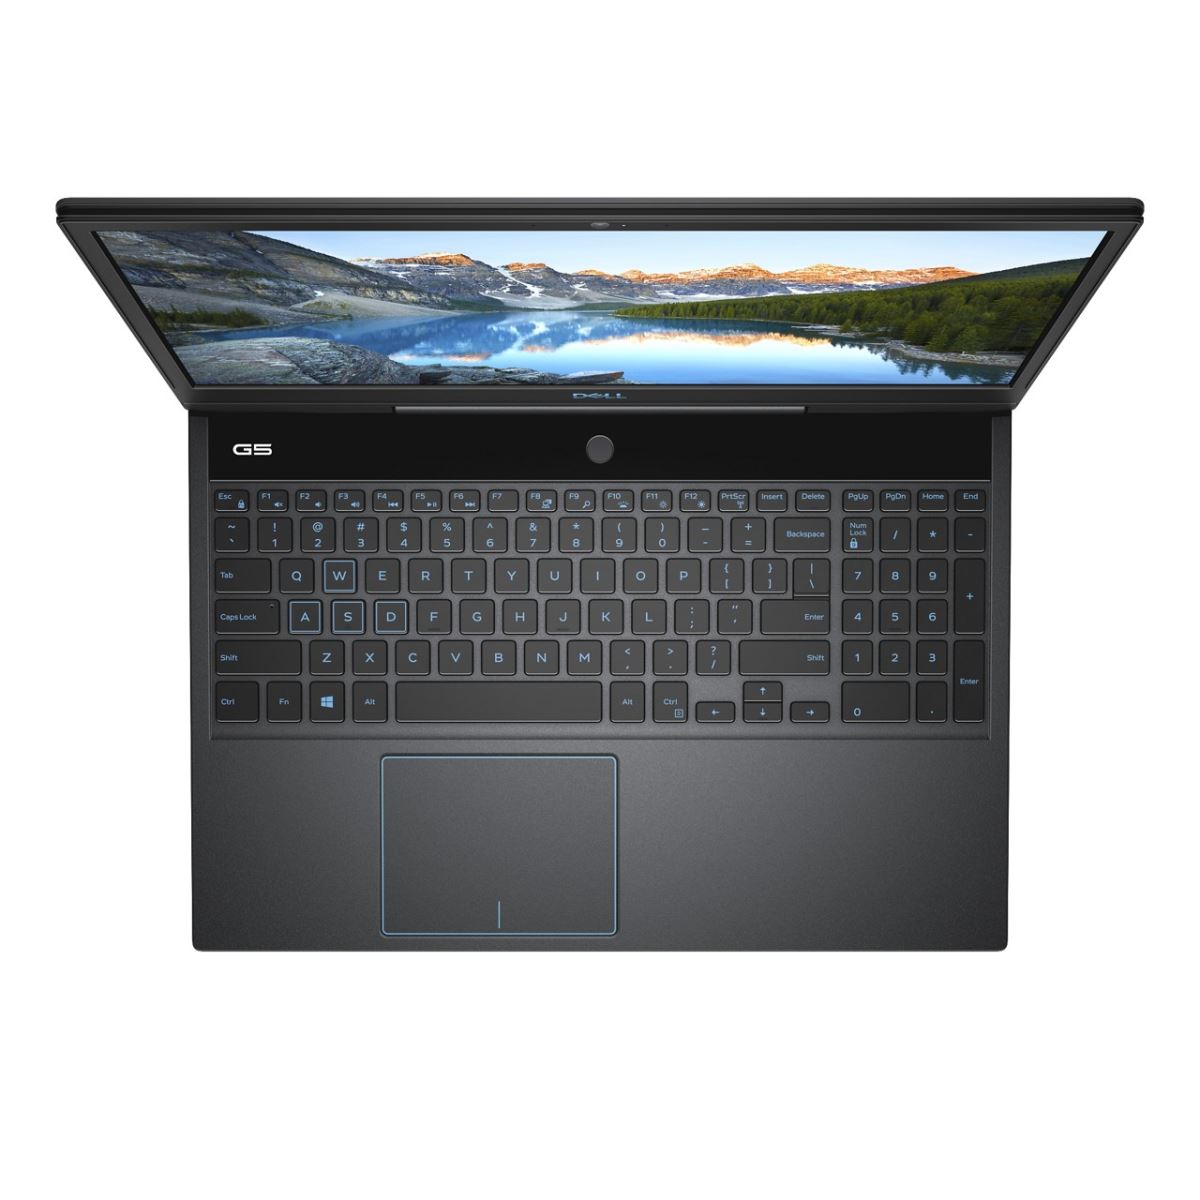 Laptop Dell Inspiron G5 5590 -888.jpg